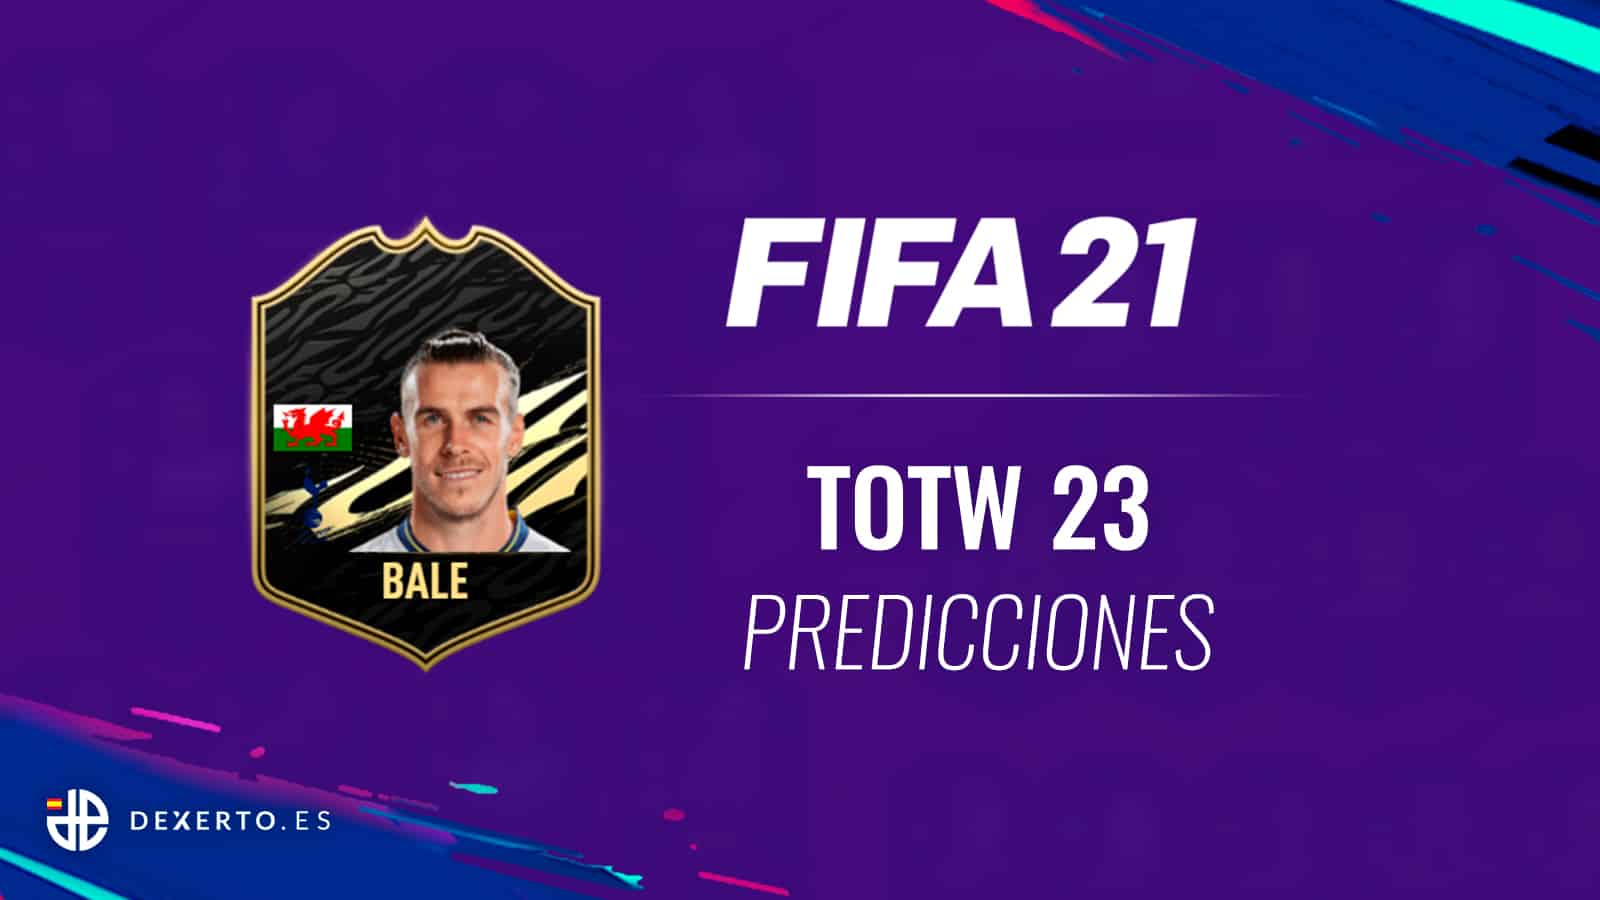 FIFA 21 TOTW 23 predicciones Bale